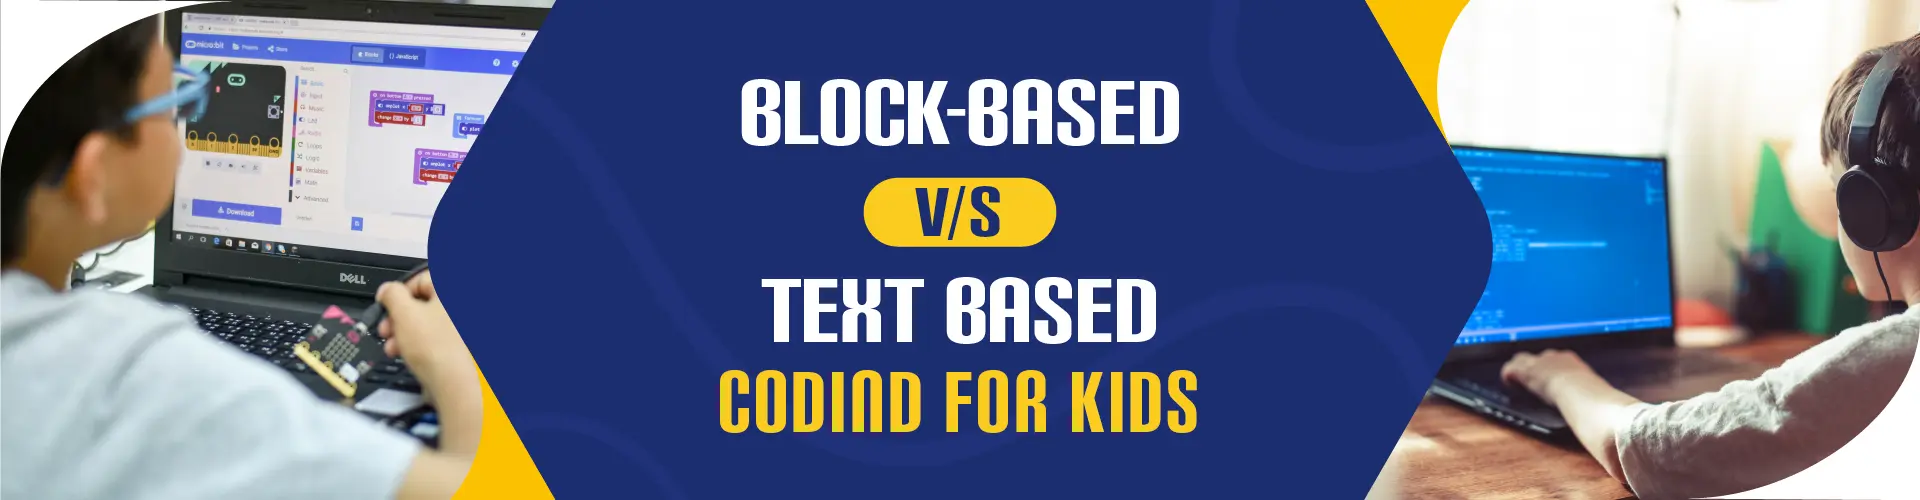 Block-based vs Text-based Coding